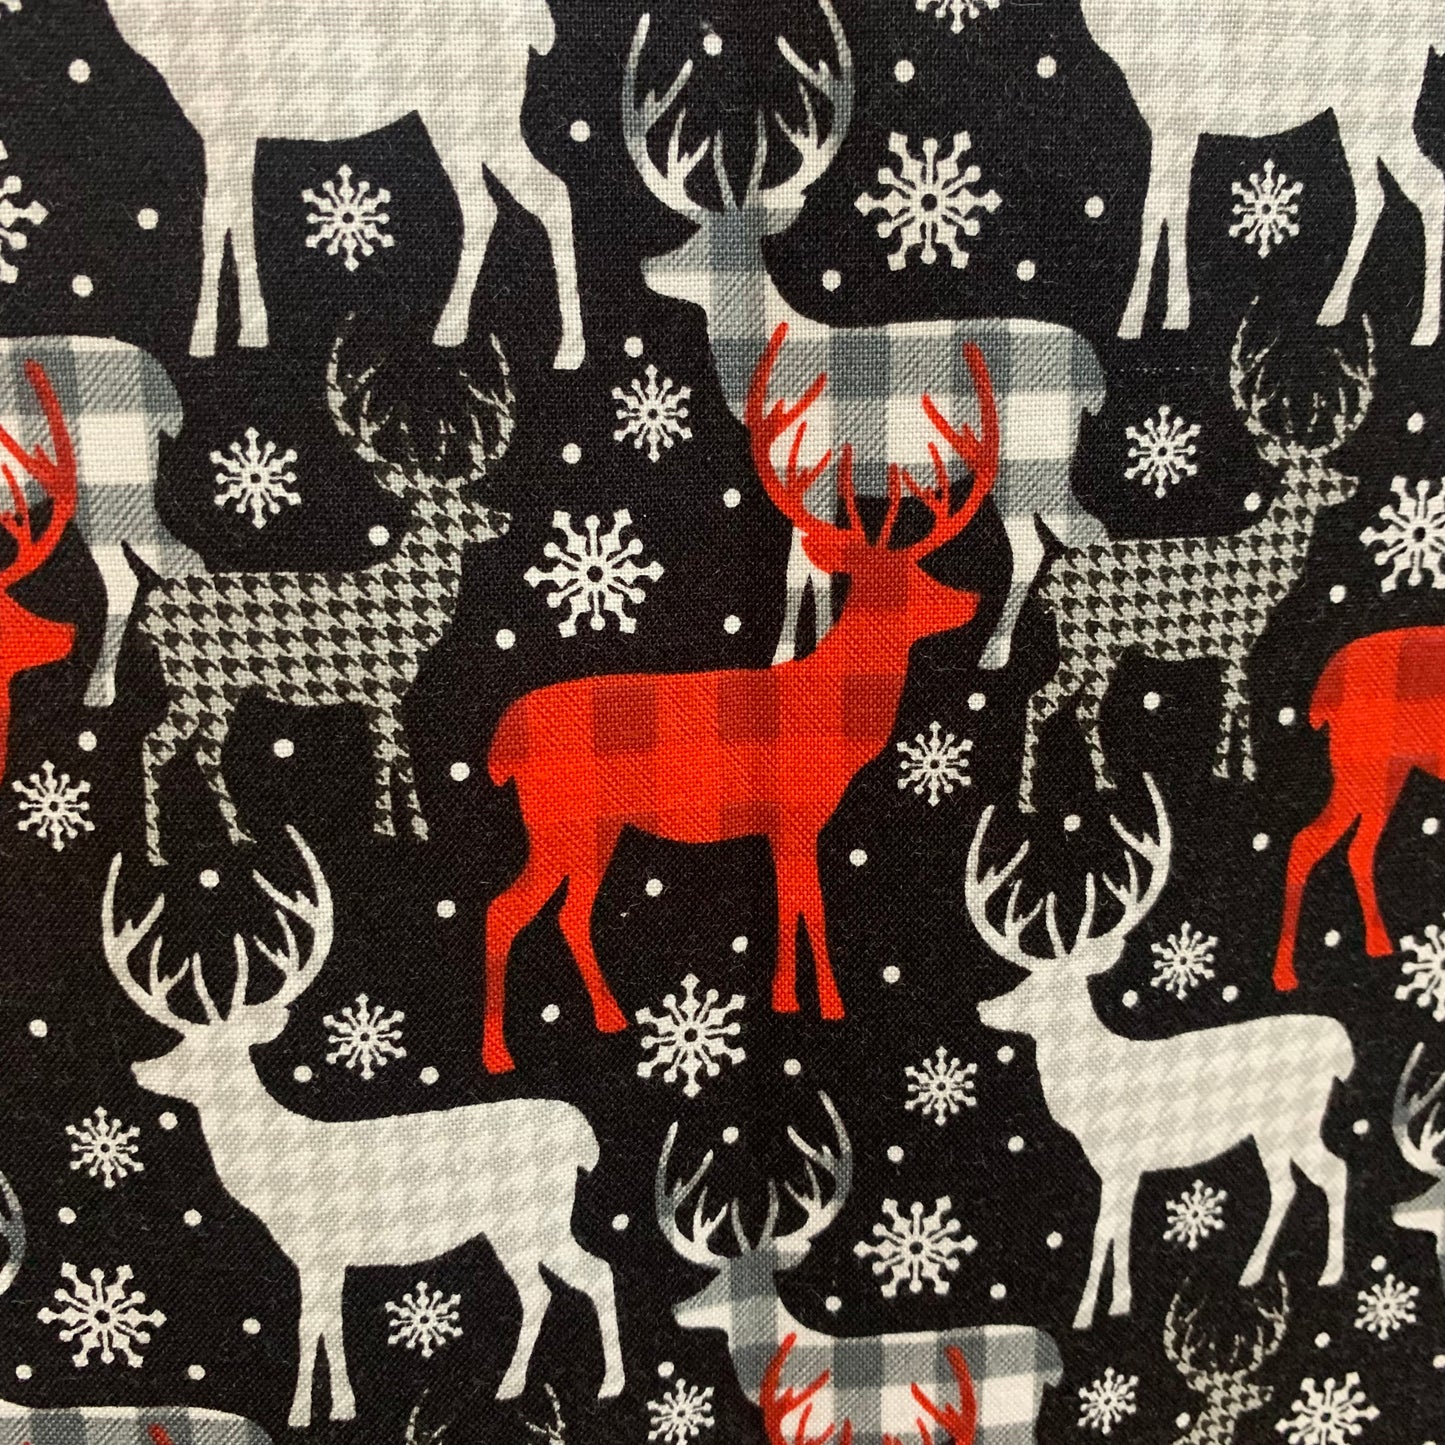 MAKIN' WHOOPEE - "Scandi Reindeer" Christmas Apron